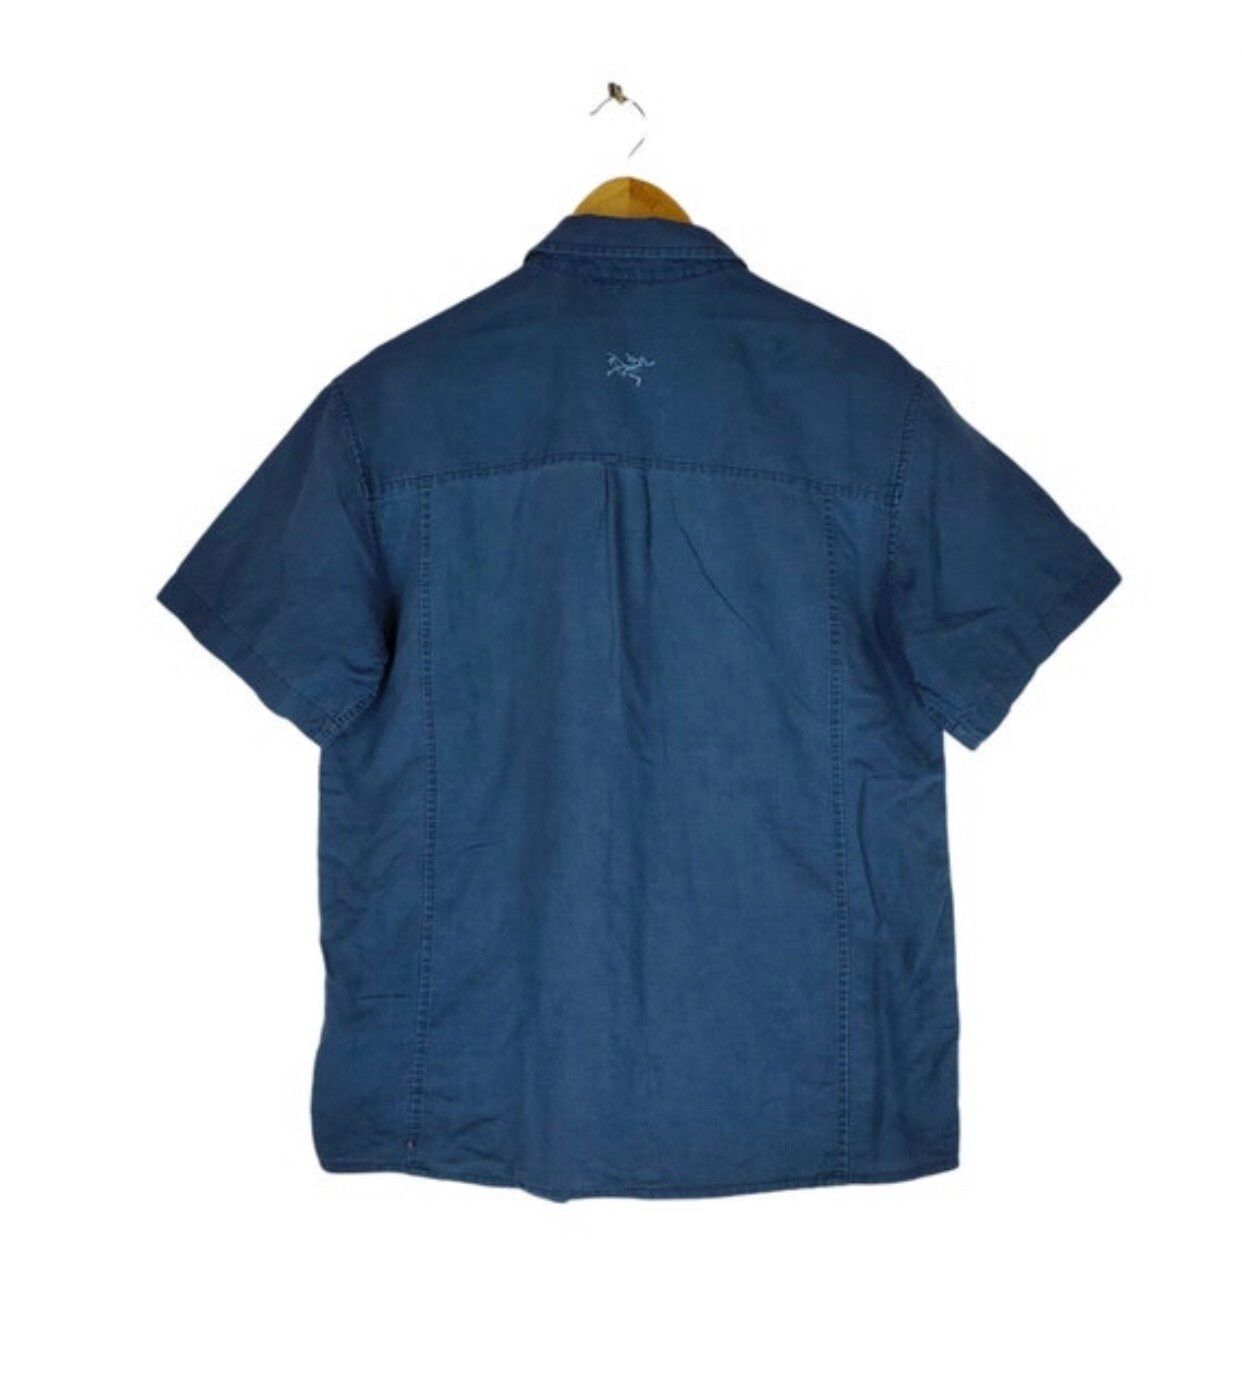 Vintage ARC’TERYX EMBROIDERY LOGO Back Full Button Shirt - 2